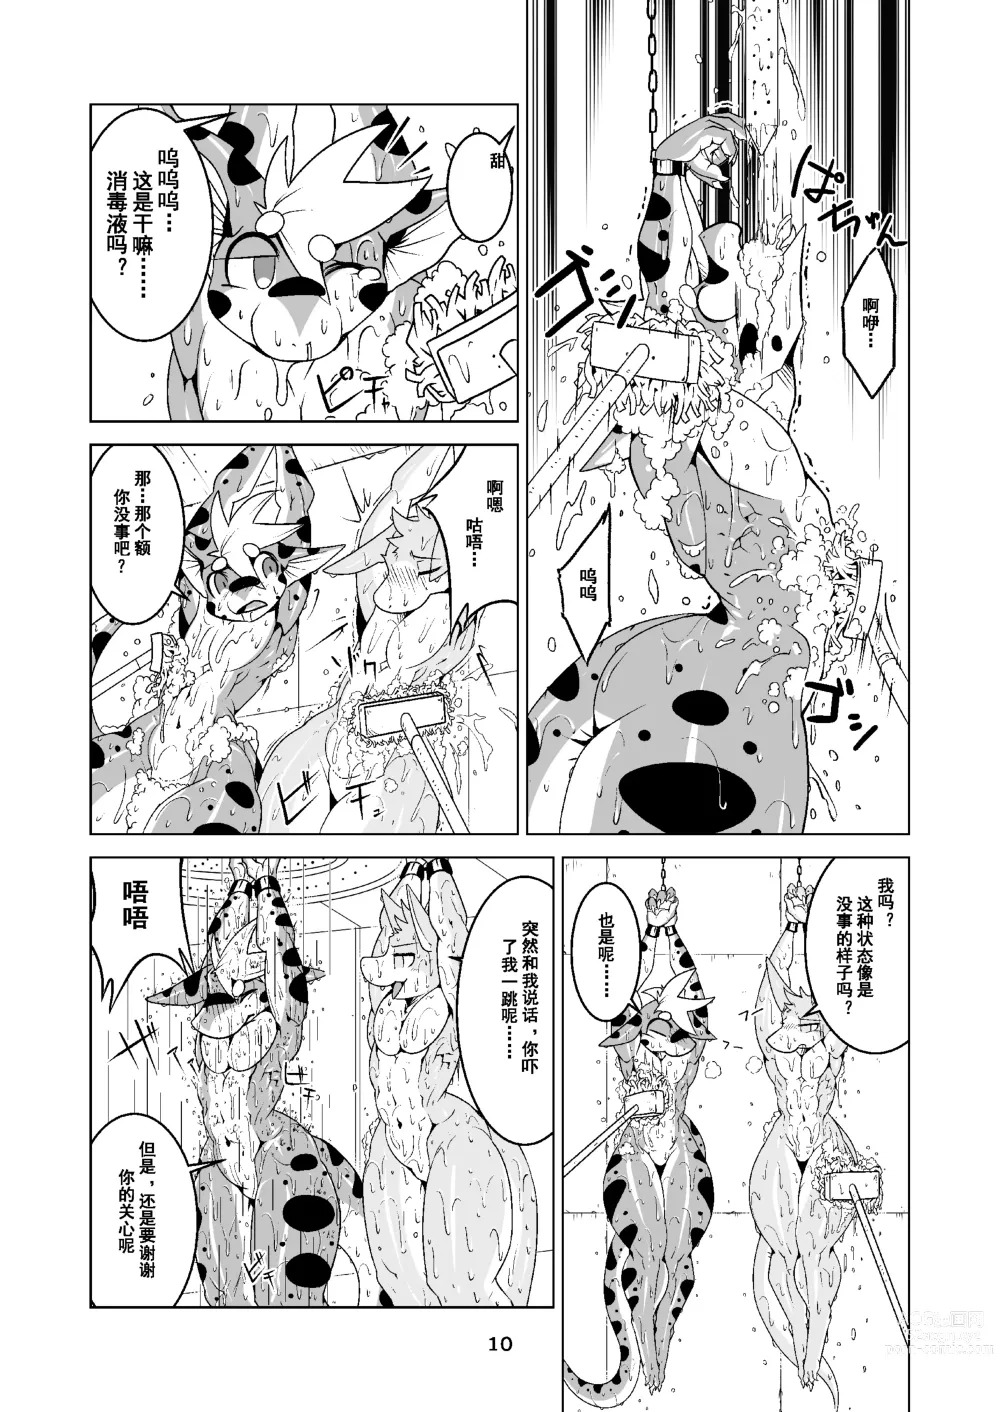 Page 10 of doujinshi Return World 5